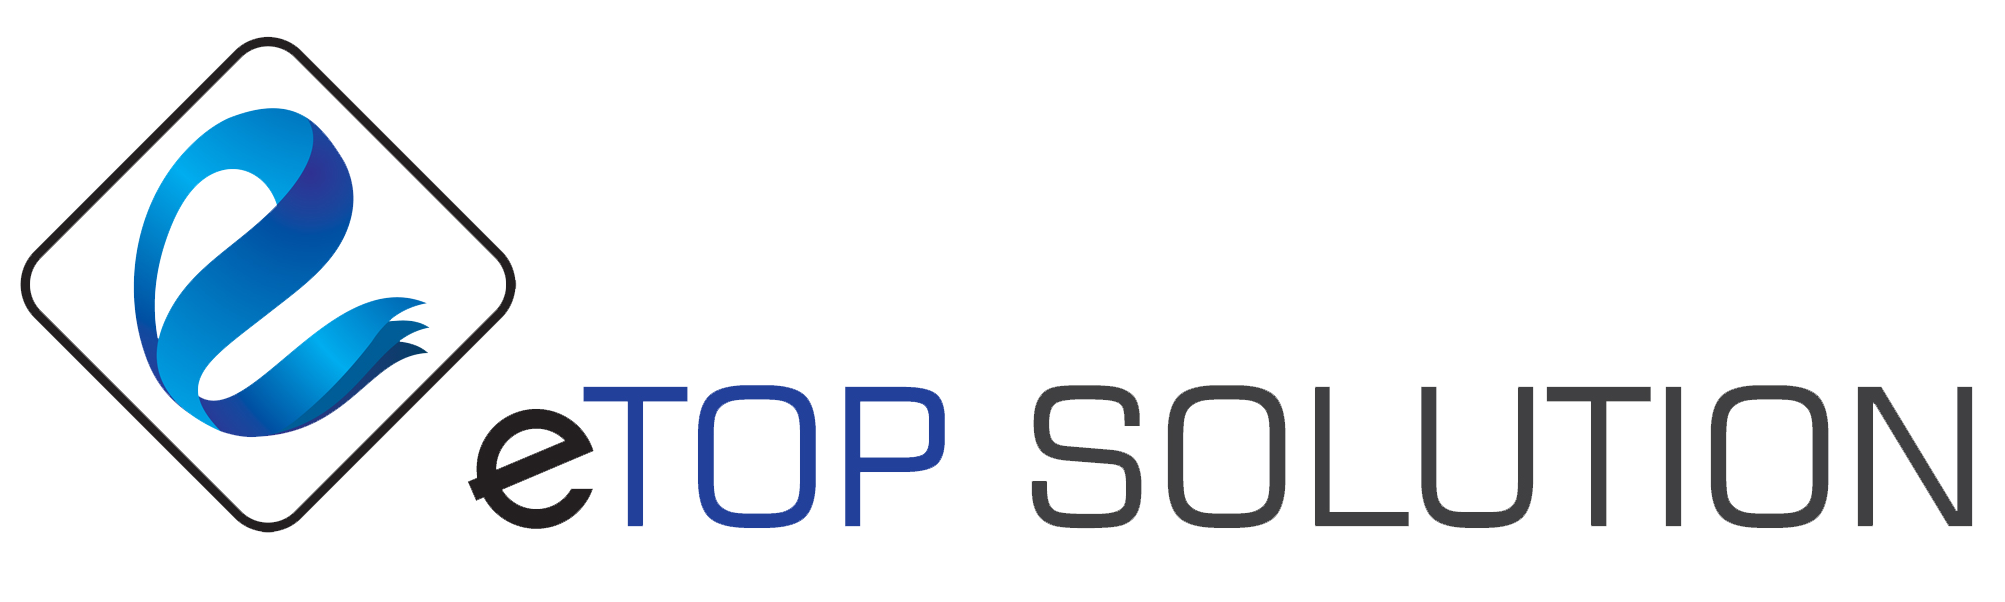 eTop Solution Logo